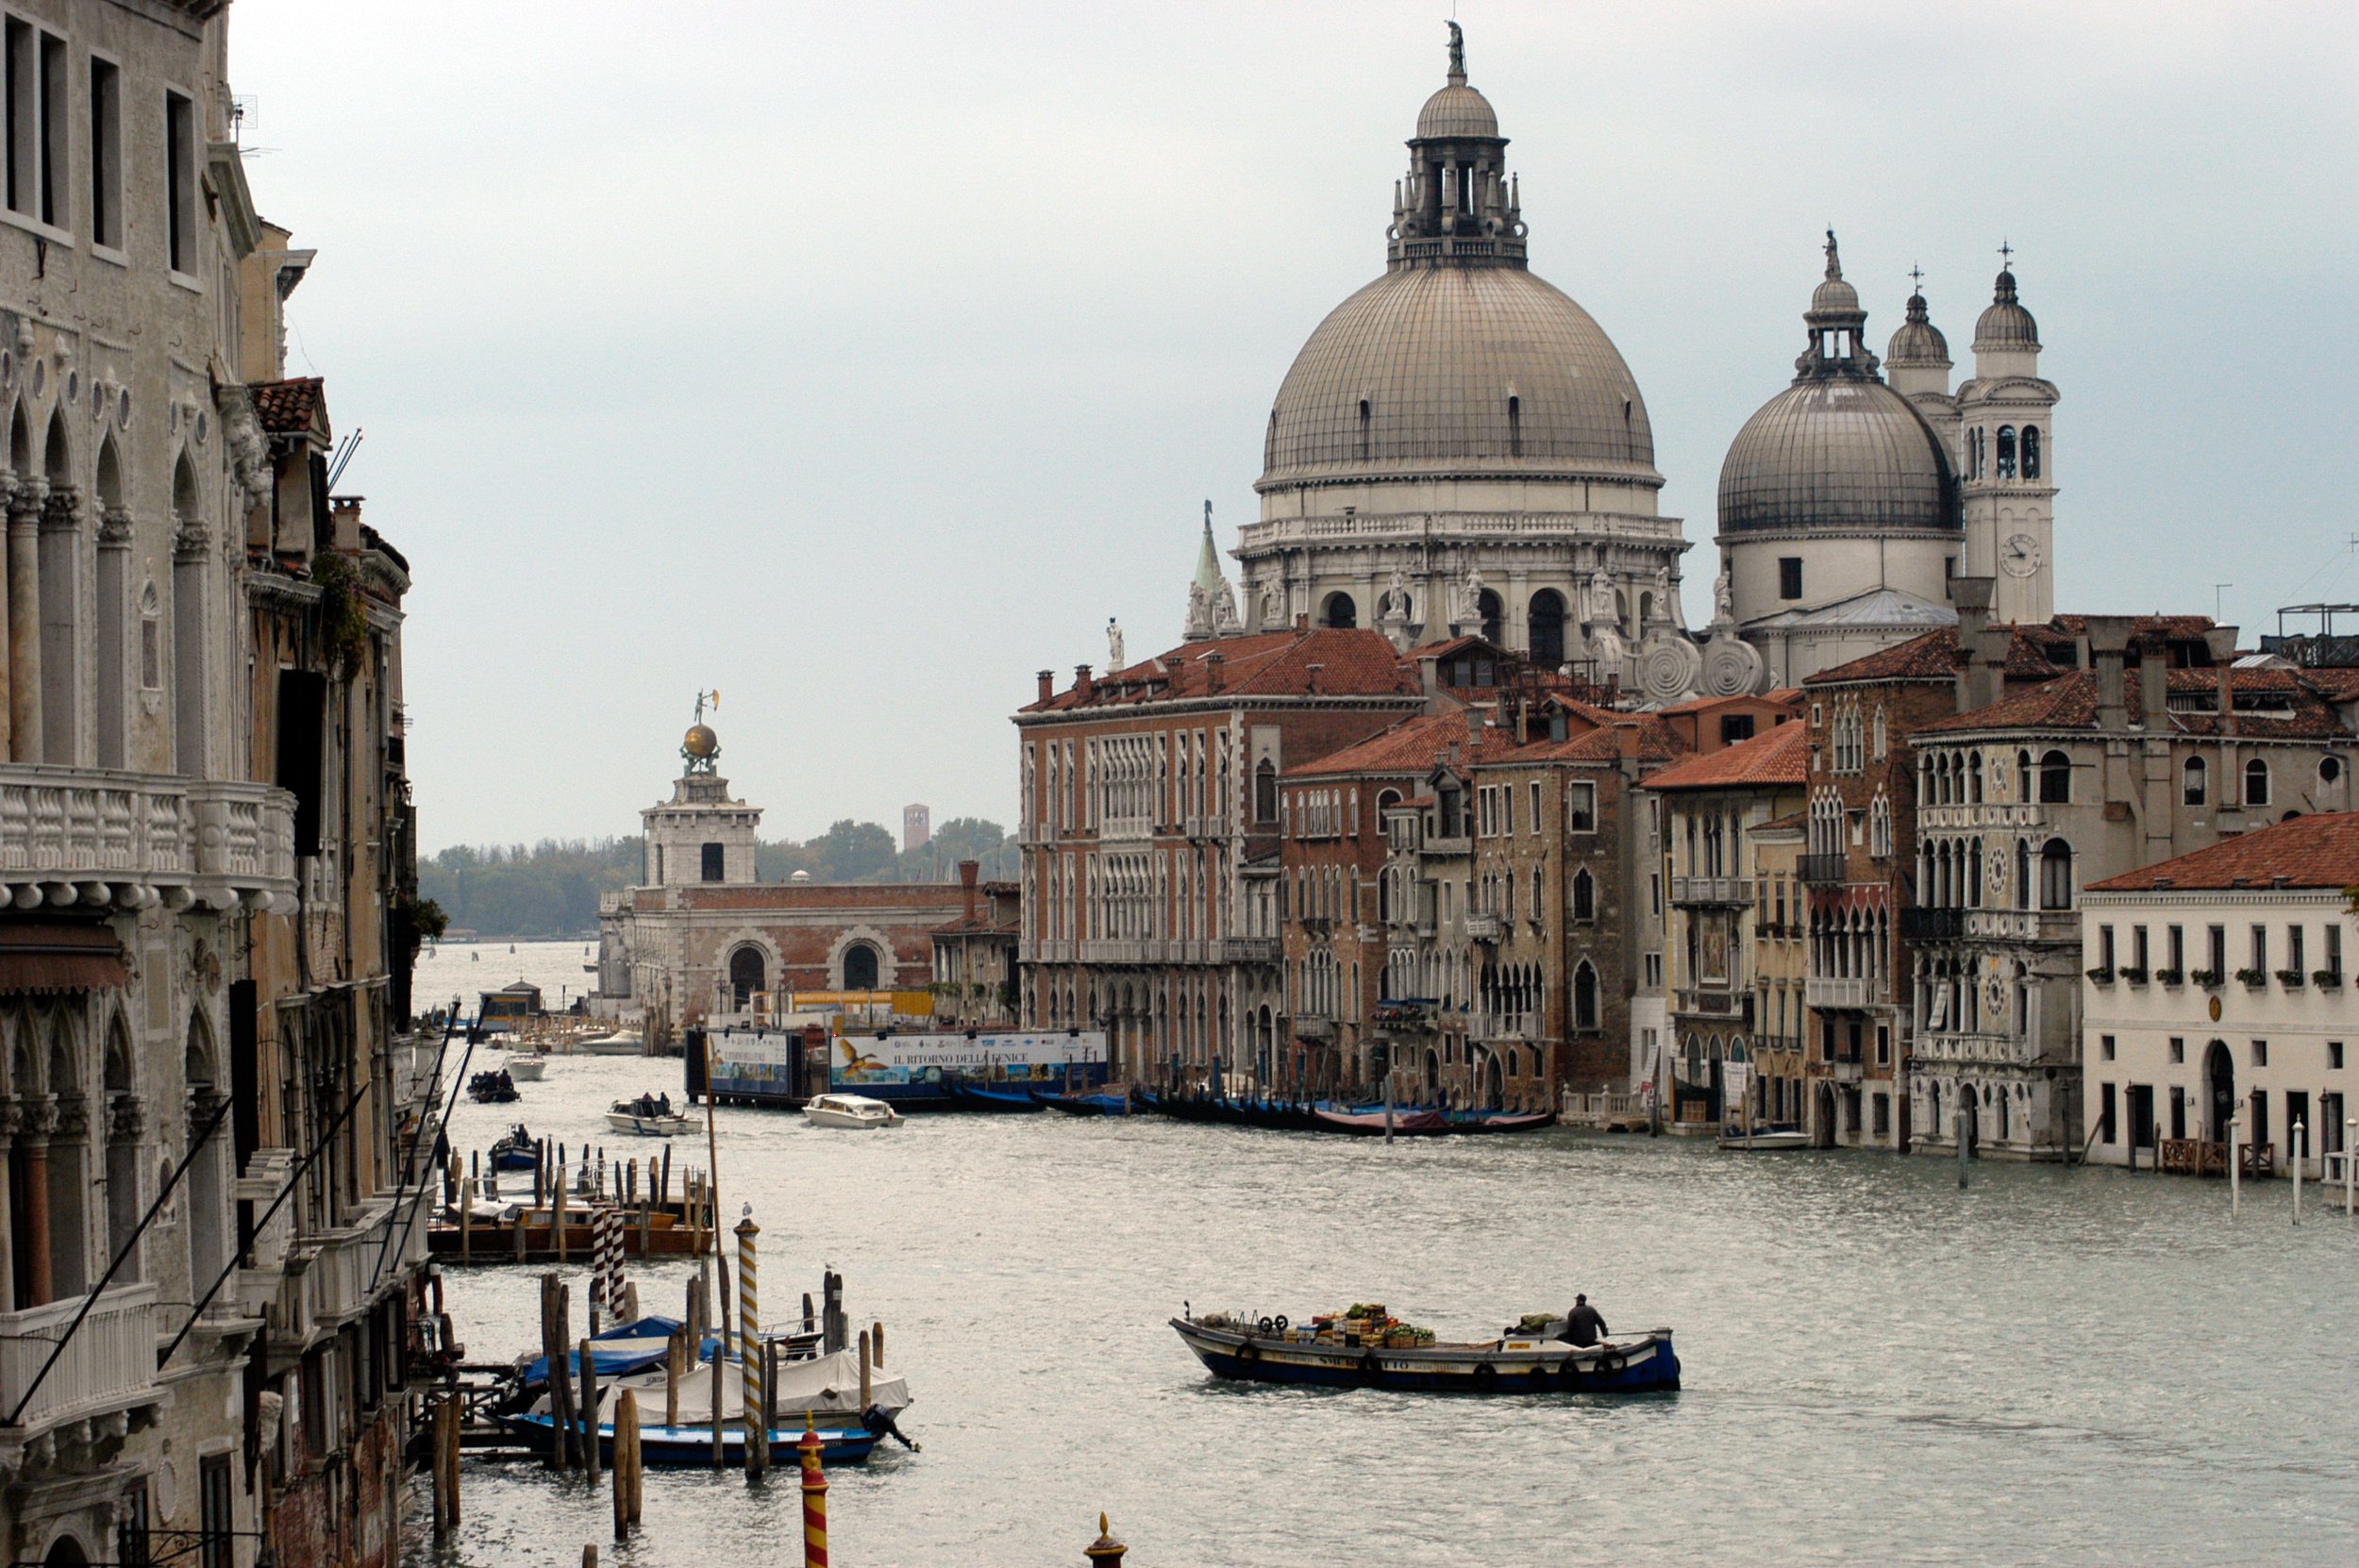 20031023-Venice Grand Canal 3untitled shoot.jpg